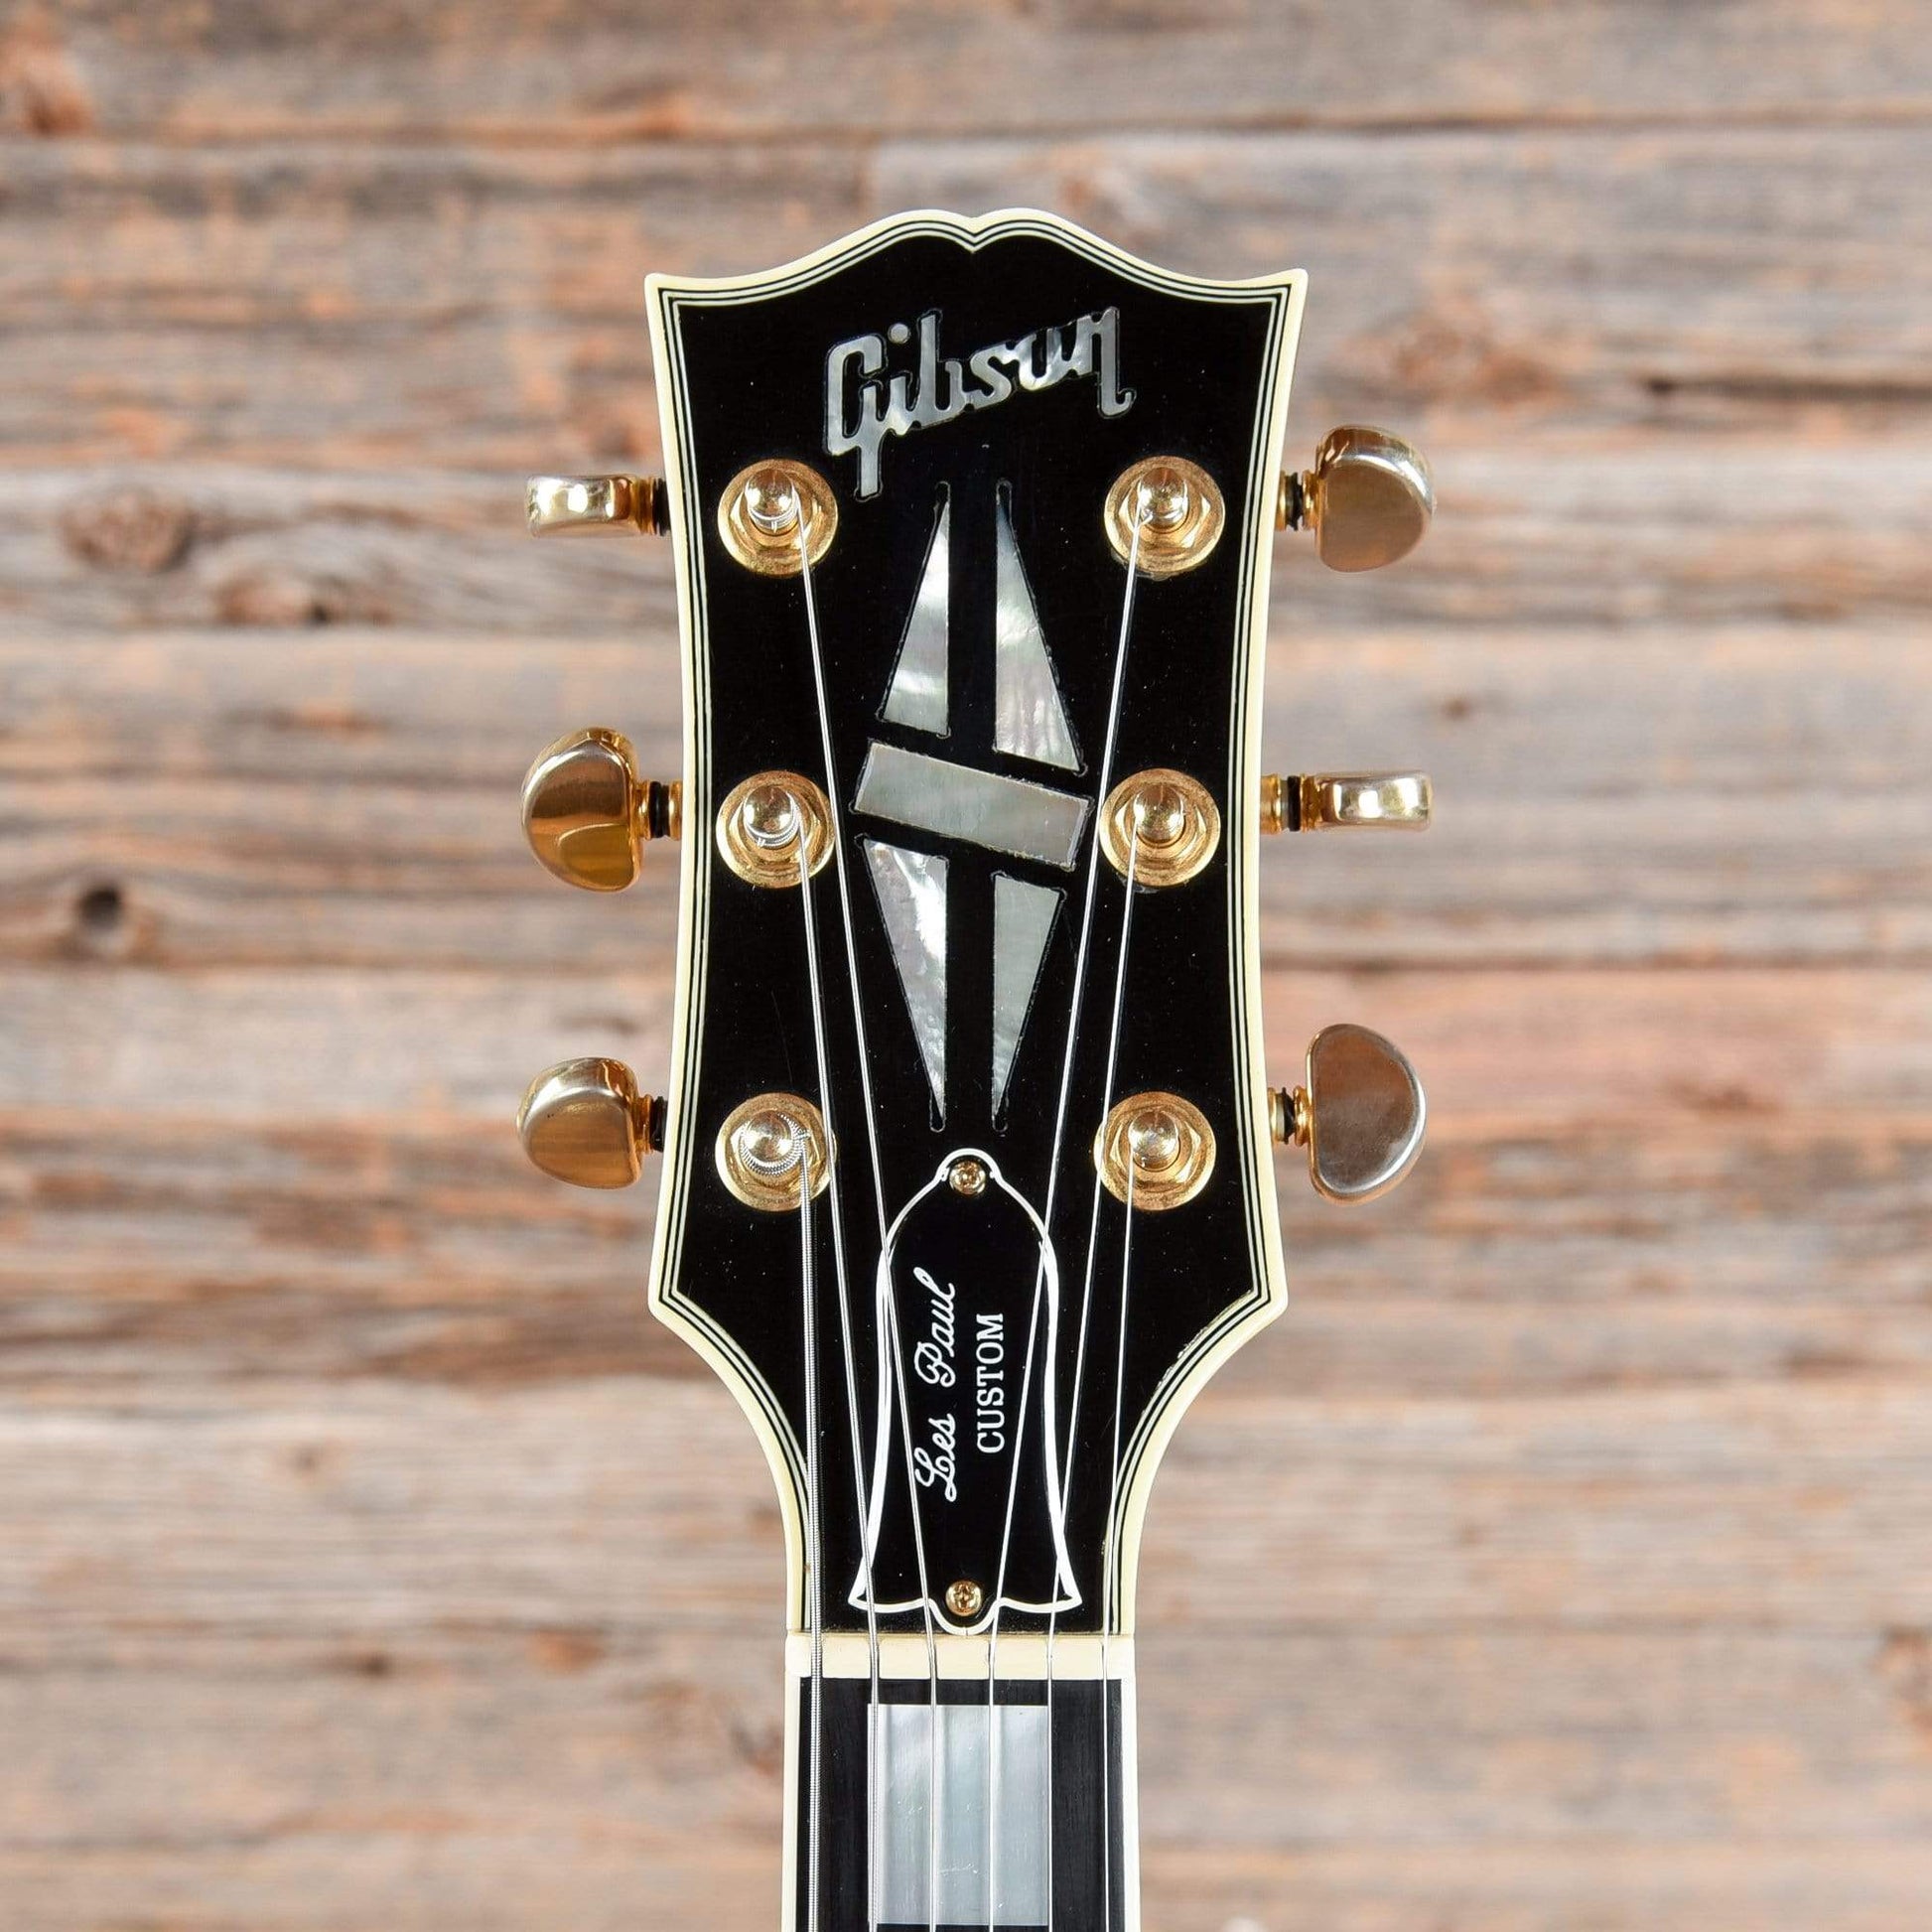 Gibson Les Paul Custom Sunburst 1997 Electric Guitars / Solid Body